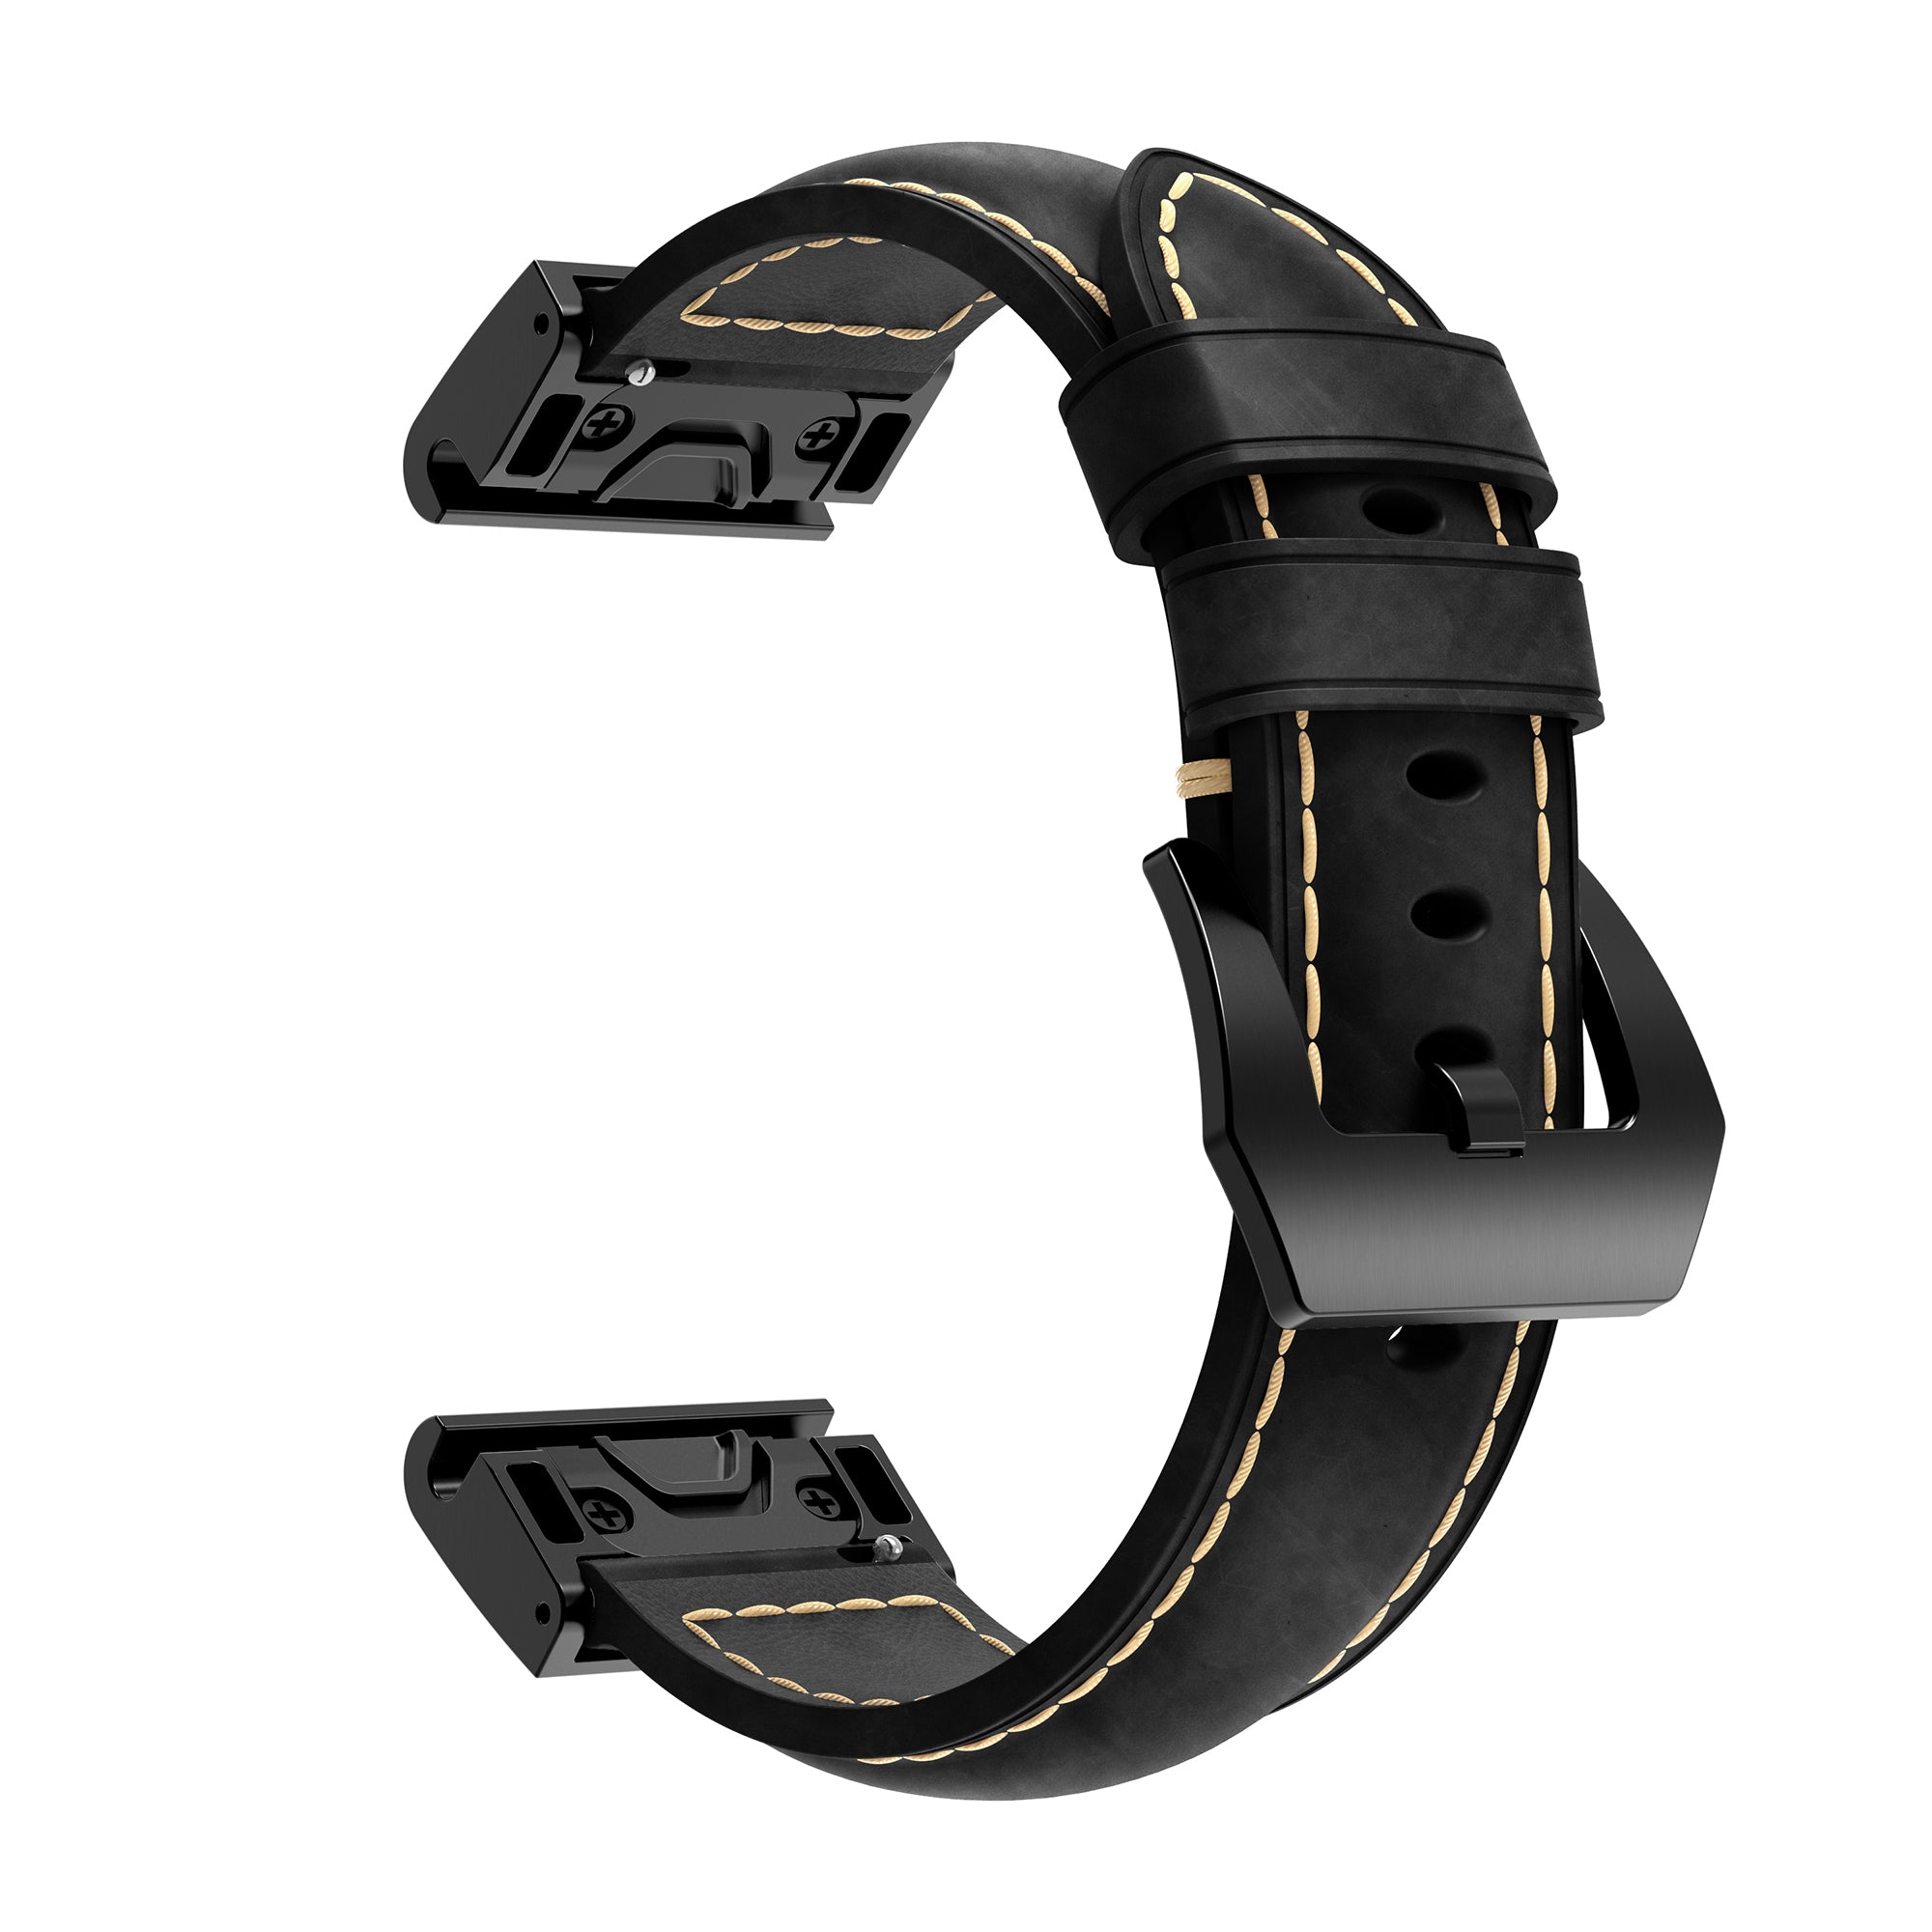 For Garmin Fenix 5X Genuine Leather Watch Band Adjustable Wrist Strap Replacement - Black